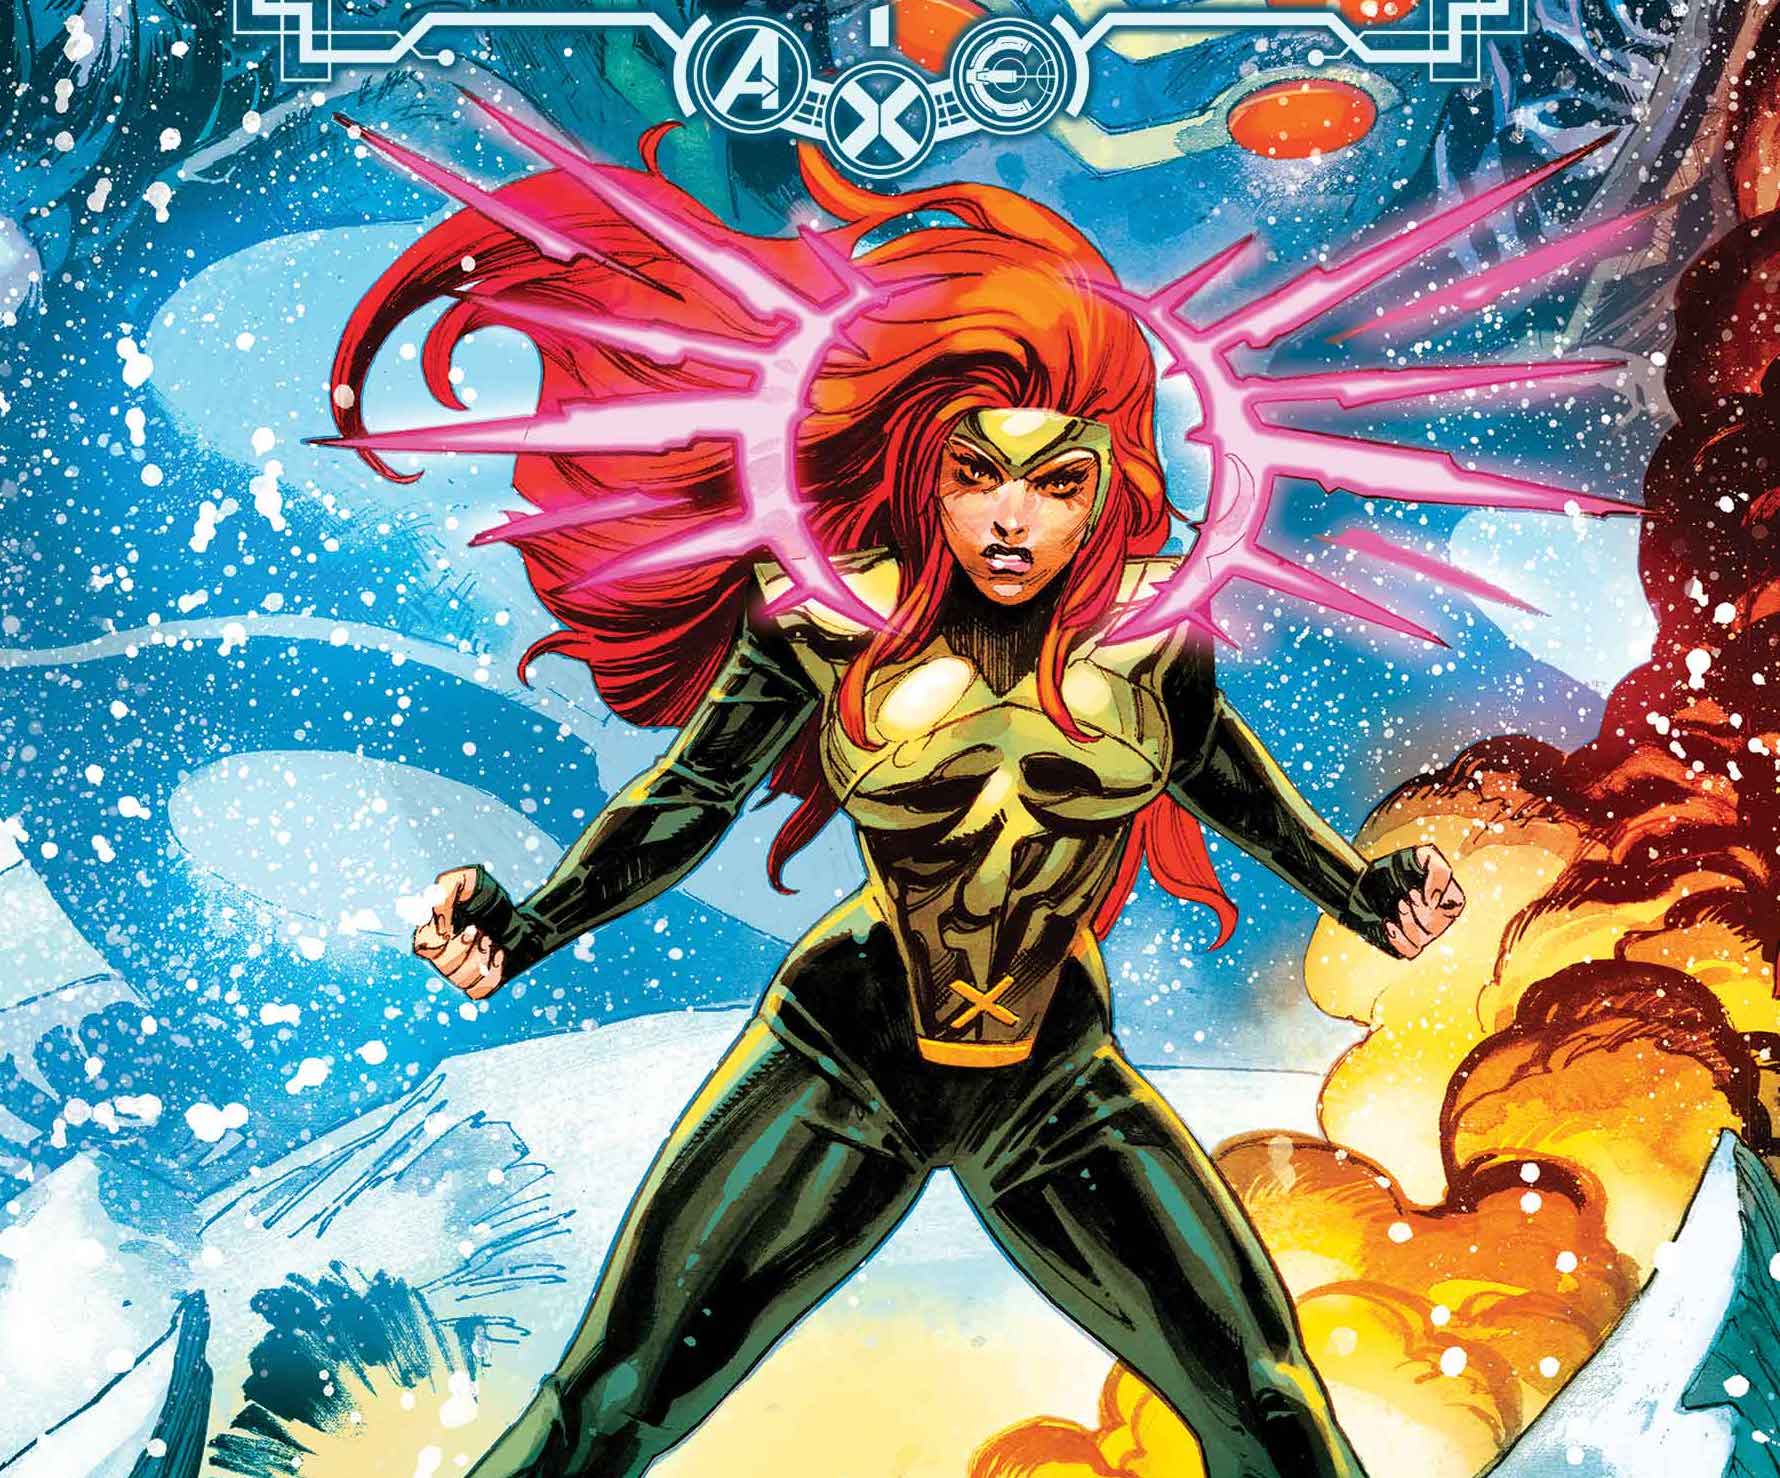 'A.X.E.: X-Men' #1 reveals the full force of Jean Grey